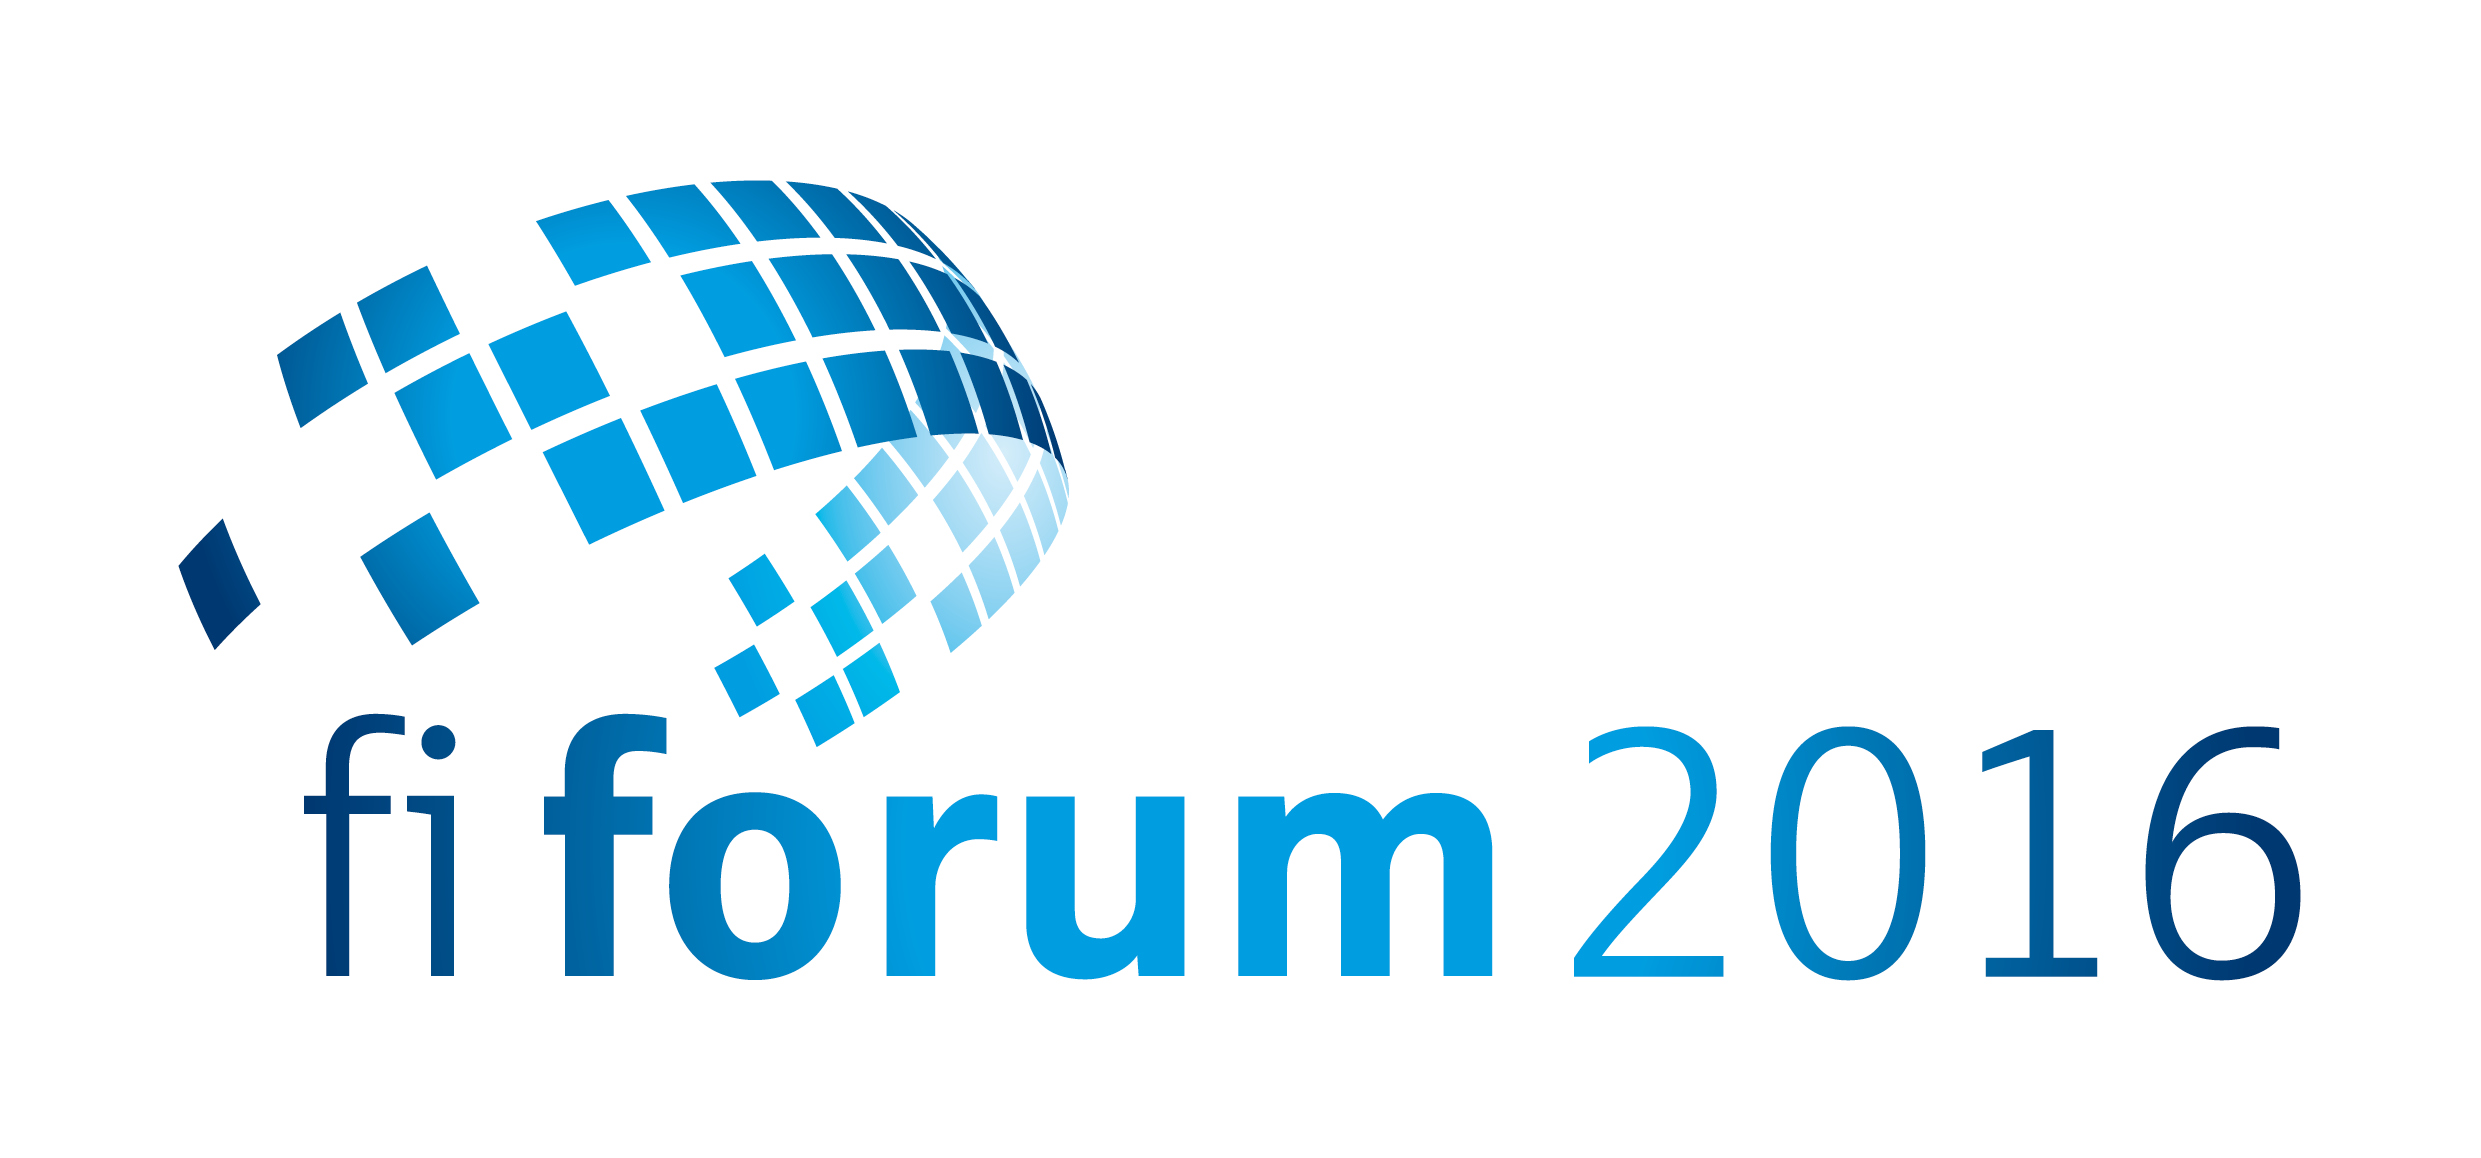 FI Forum 2016